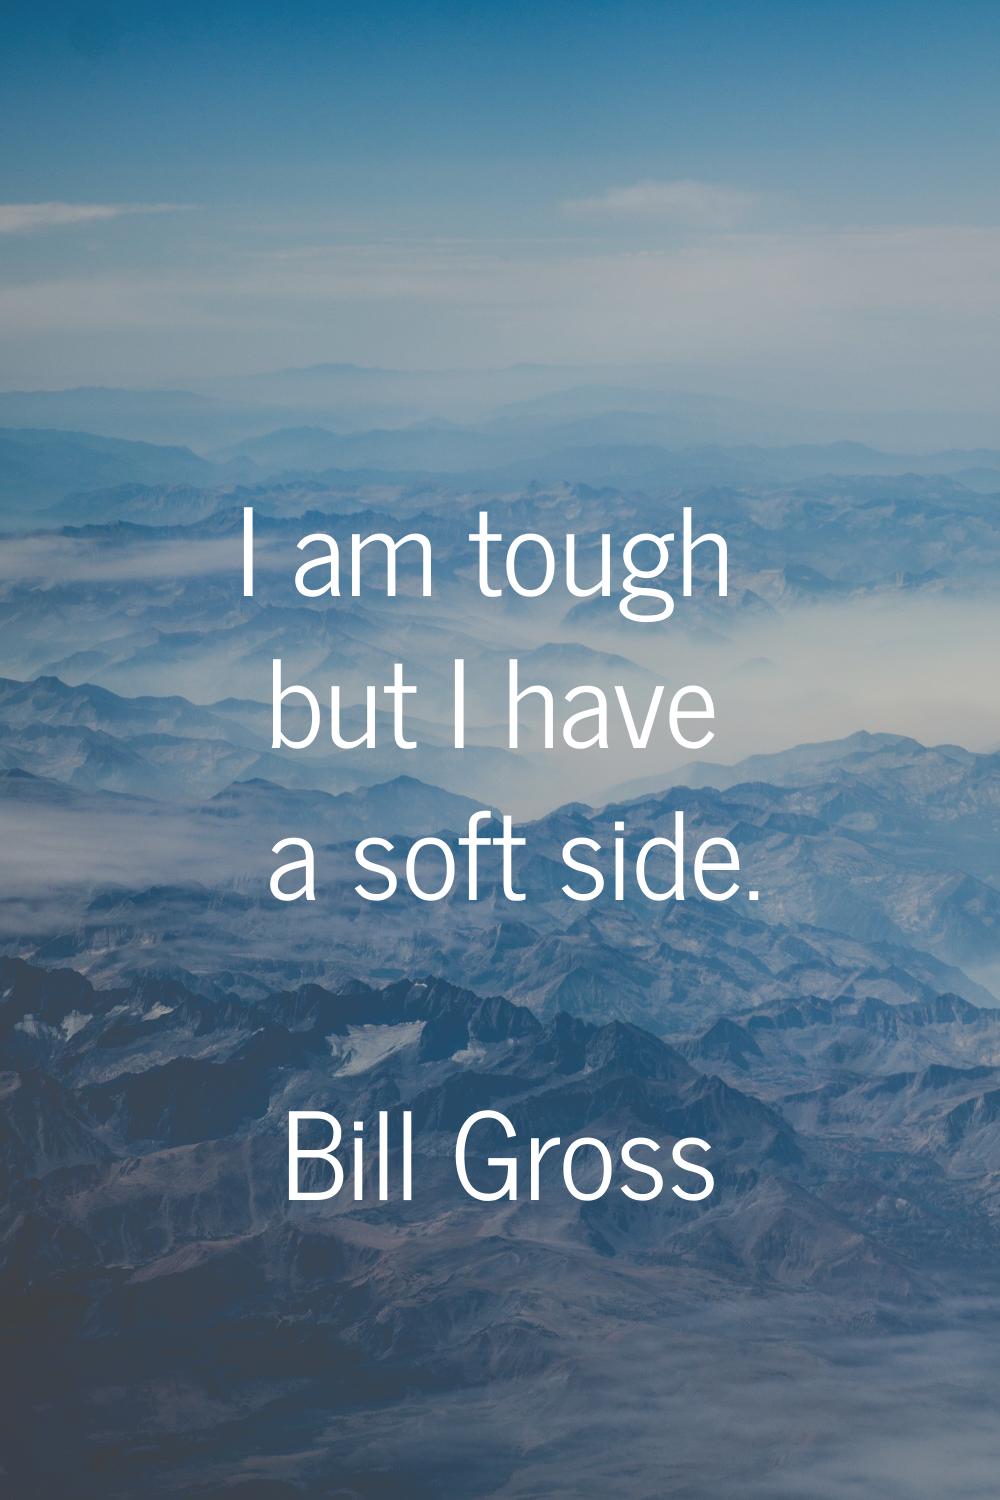 I am tough but I have a soft side.